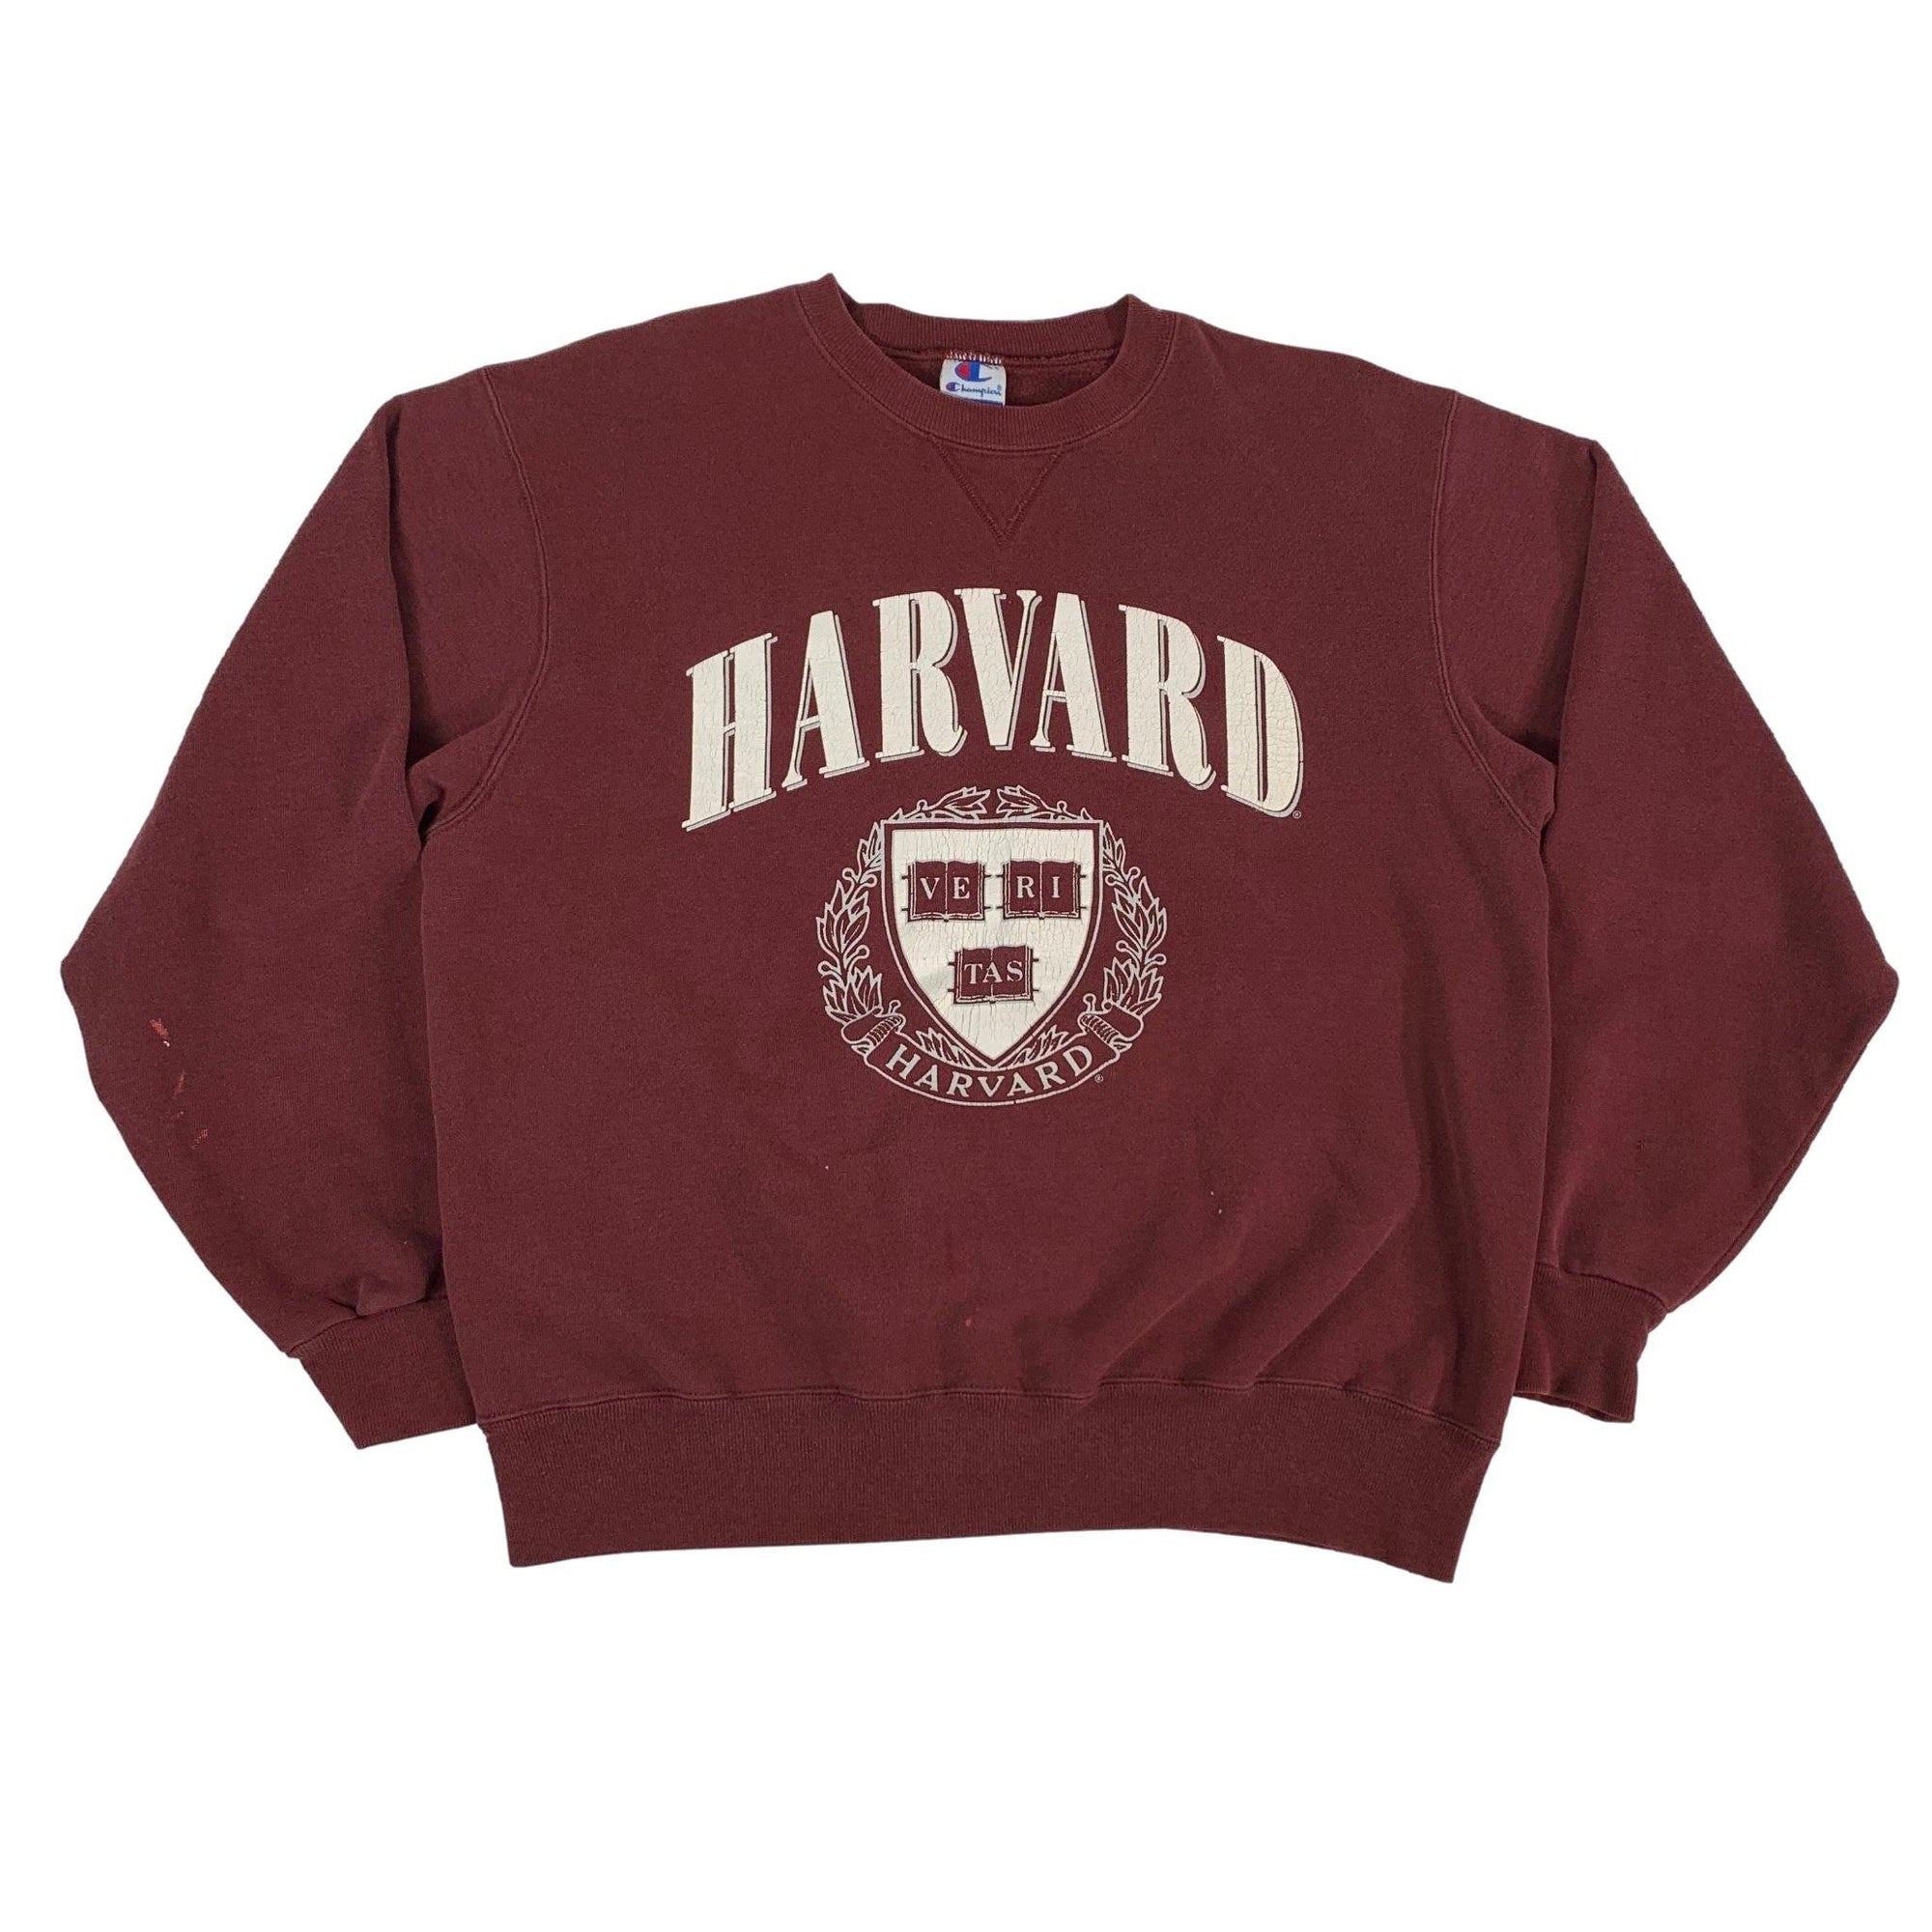 Vintage Champion "Harvard" Crewneck Sweatshirt - jointcustodydc